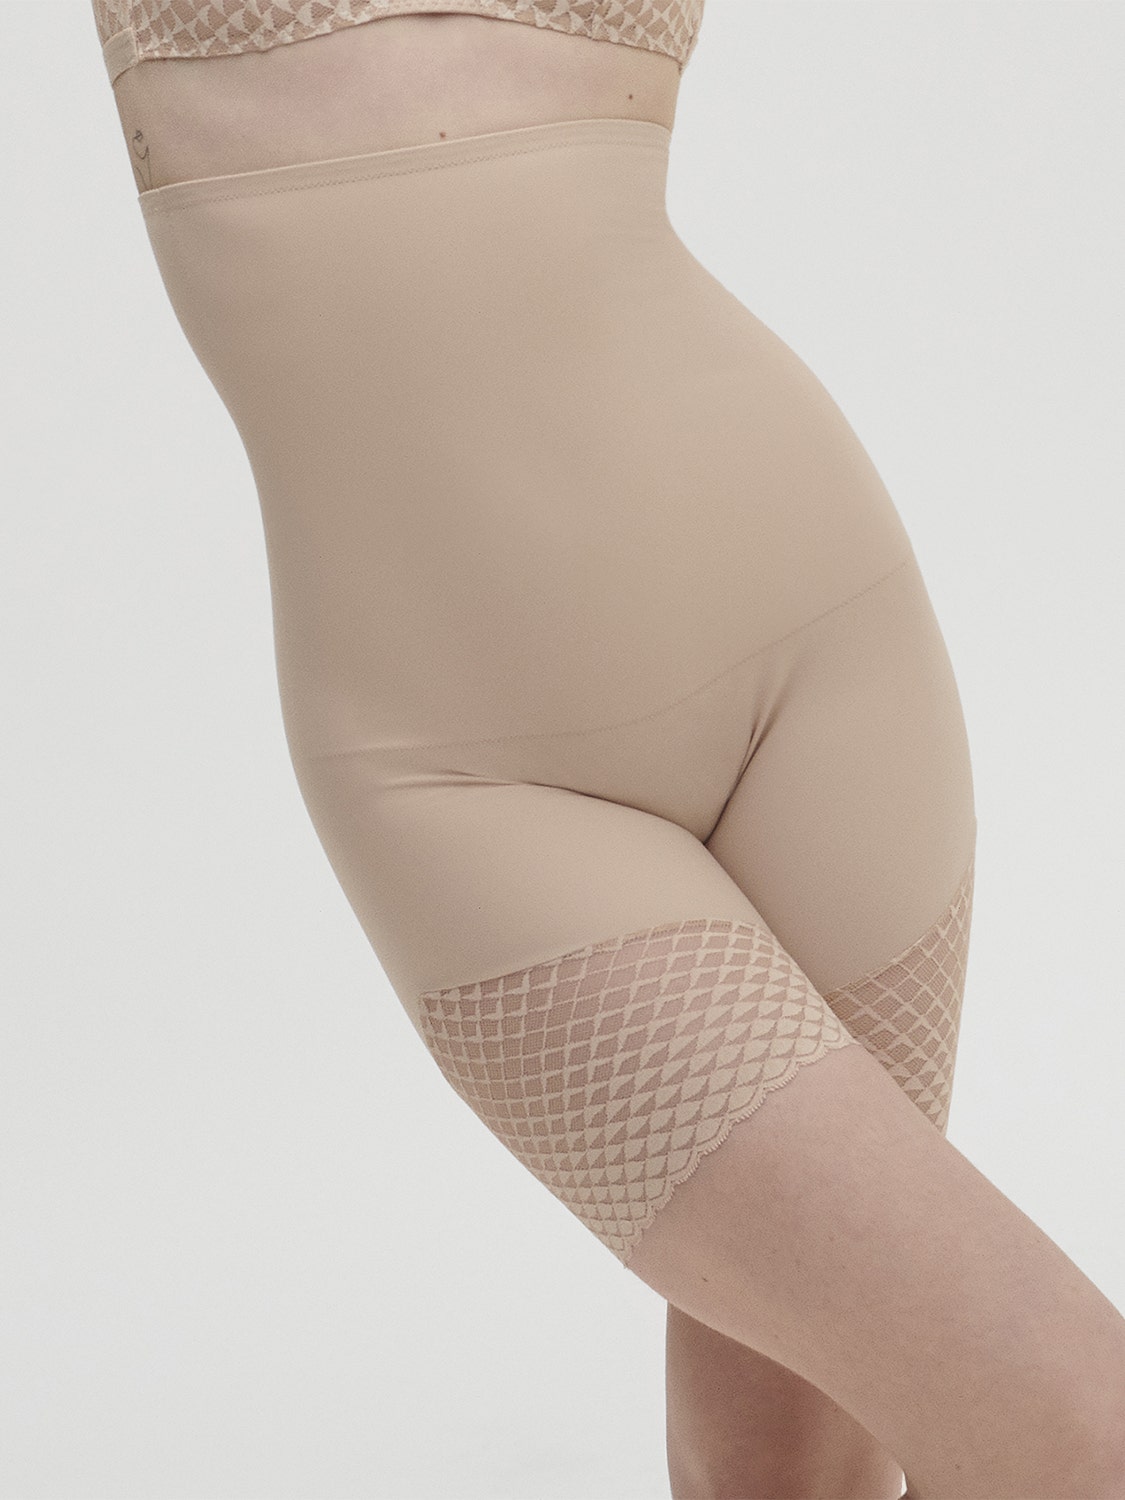 Shop For Plié Body shaping Shapewear Online – Tagged shorts